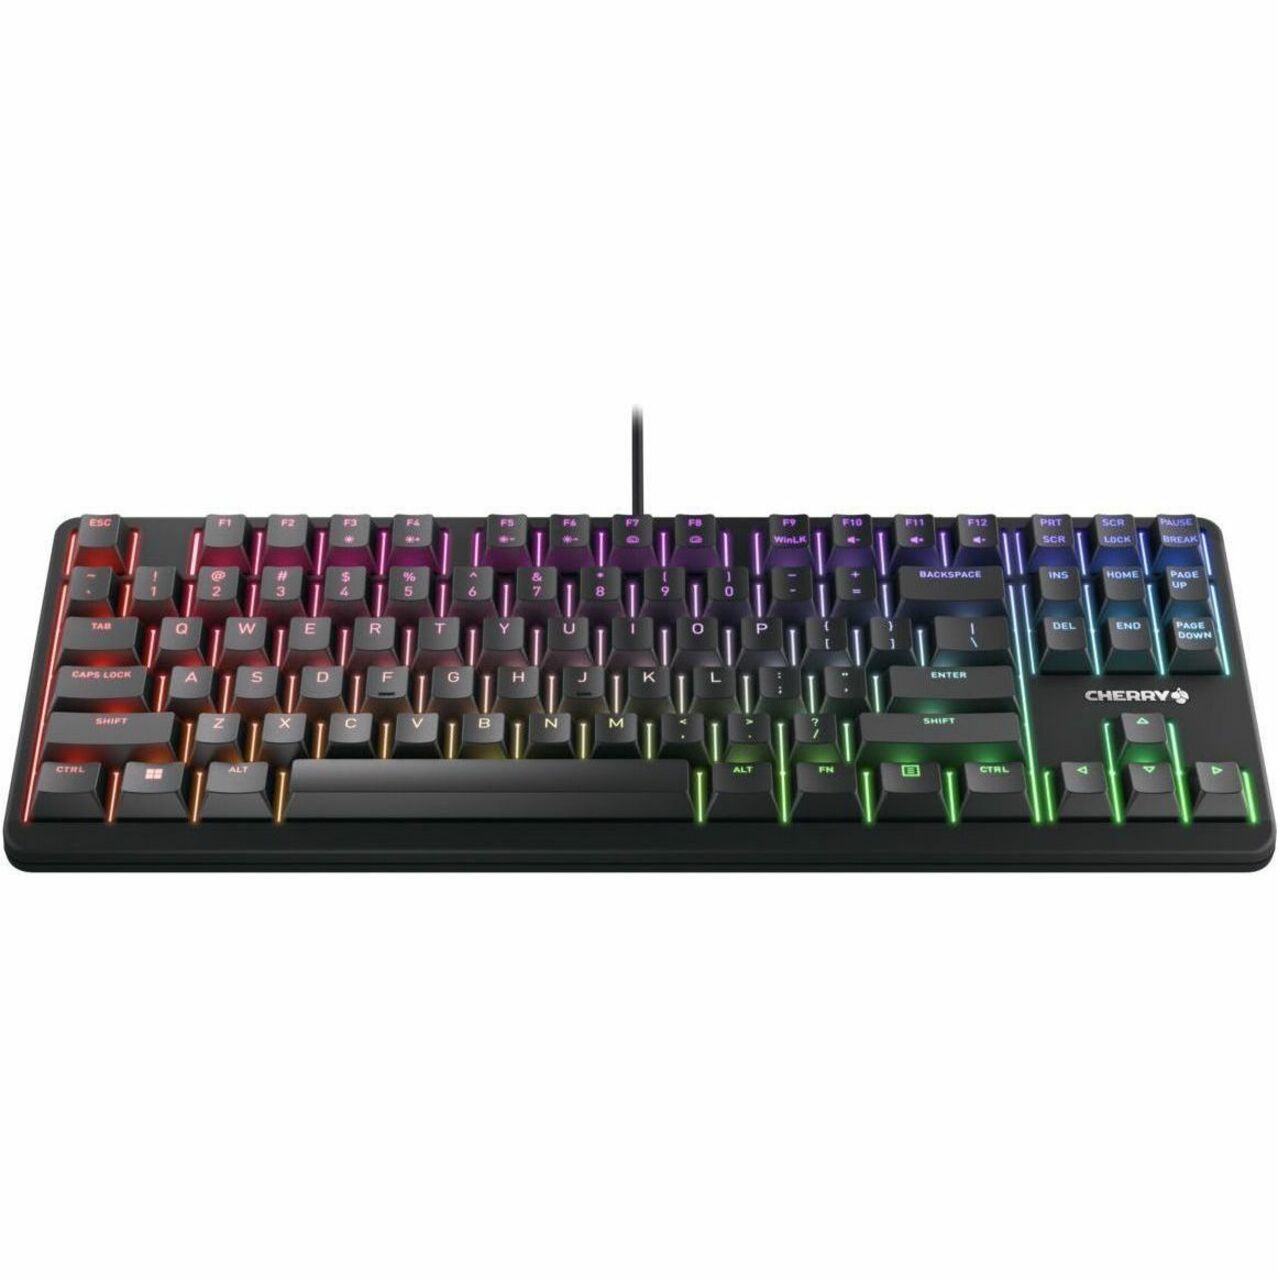 CHERRY G80-3833LWBUS-2 Keyboard, Compact Mechanical TKL Keyboard with RGB Backlight